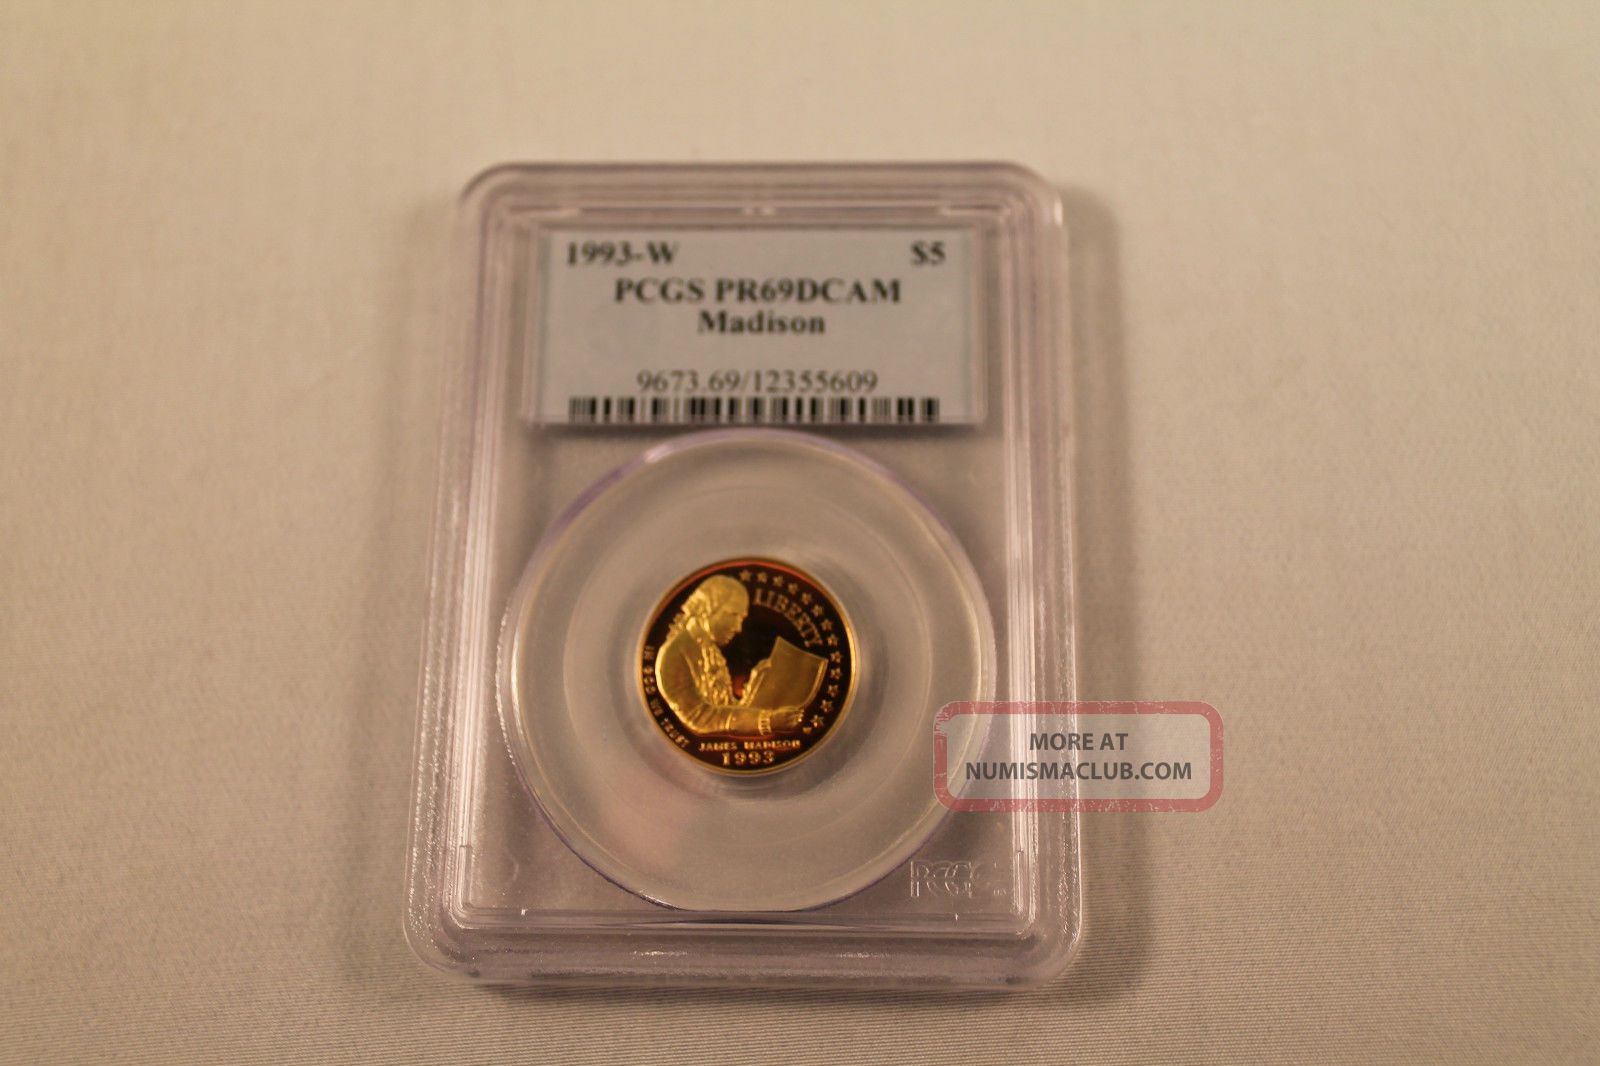 1993 - W Madison $5 Gold Five Dollar Commemorative Pr69dcam Pcgs